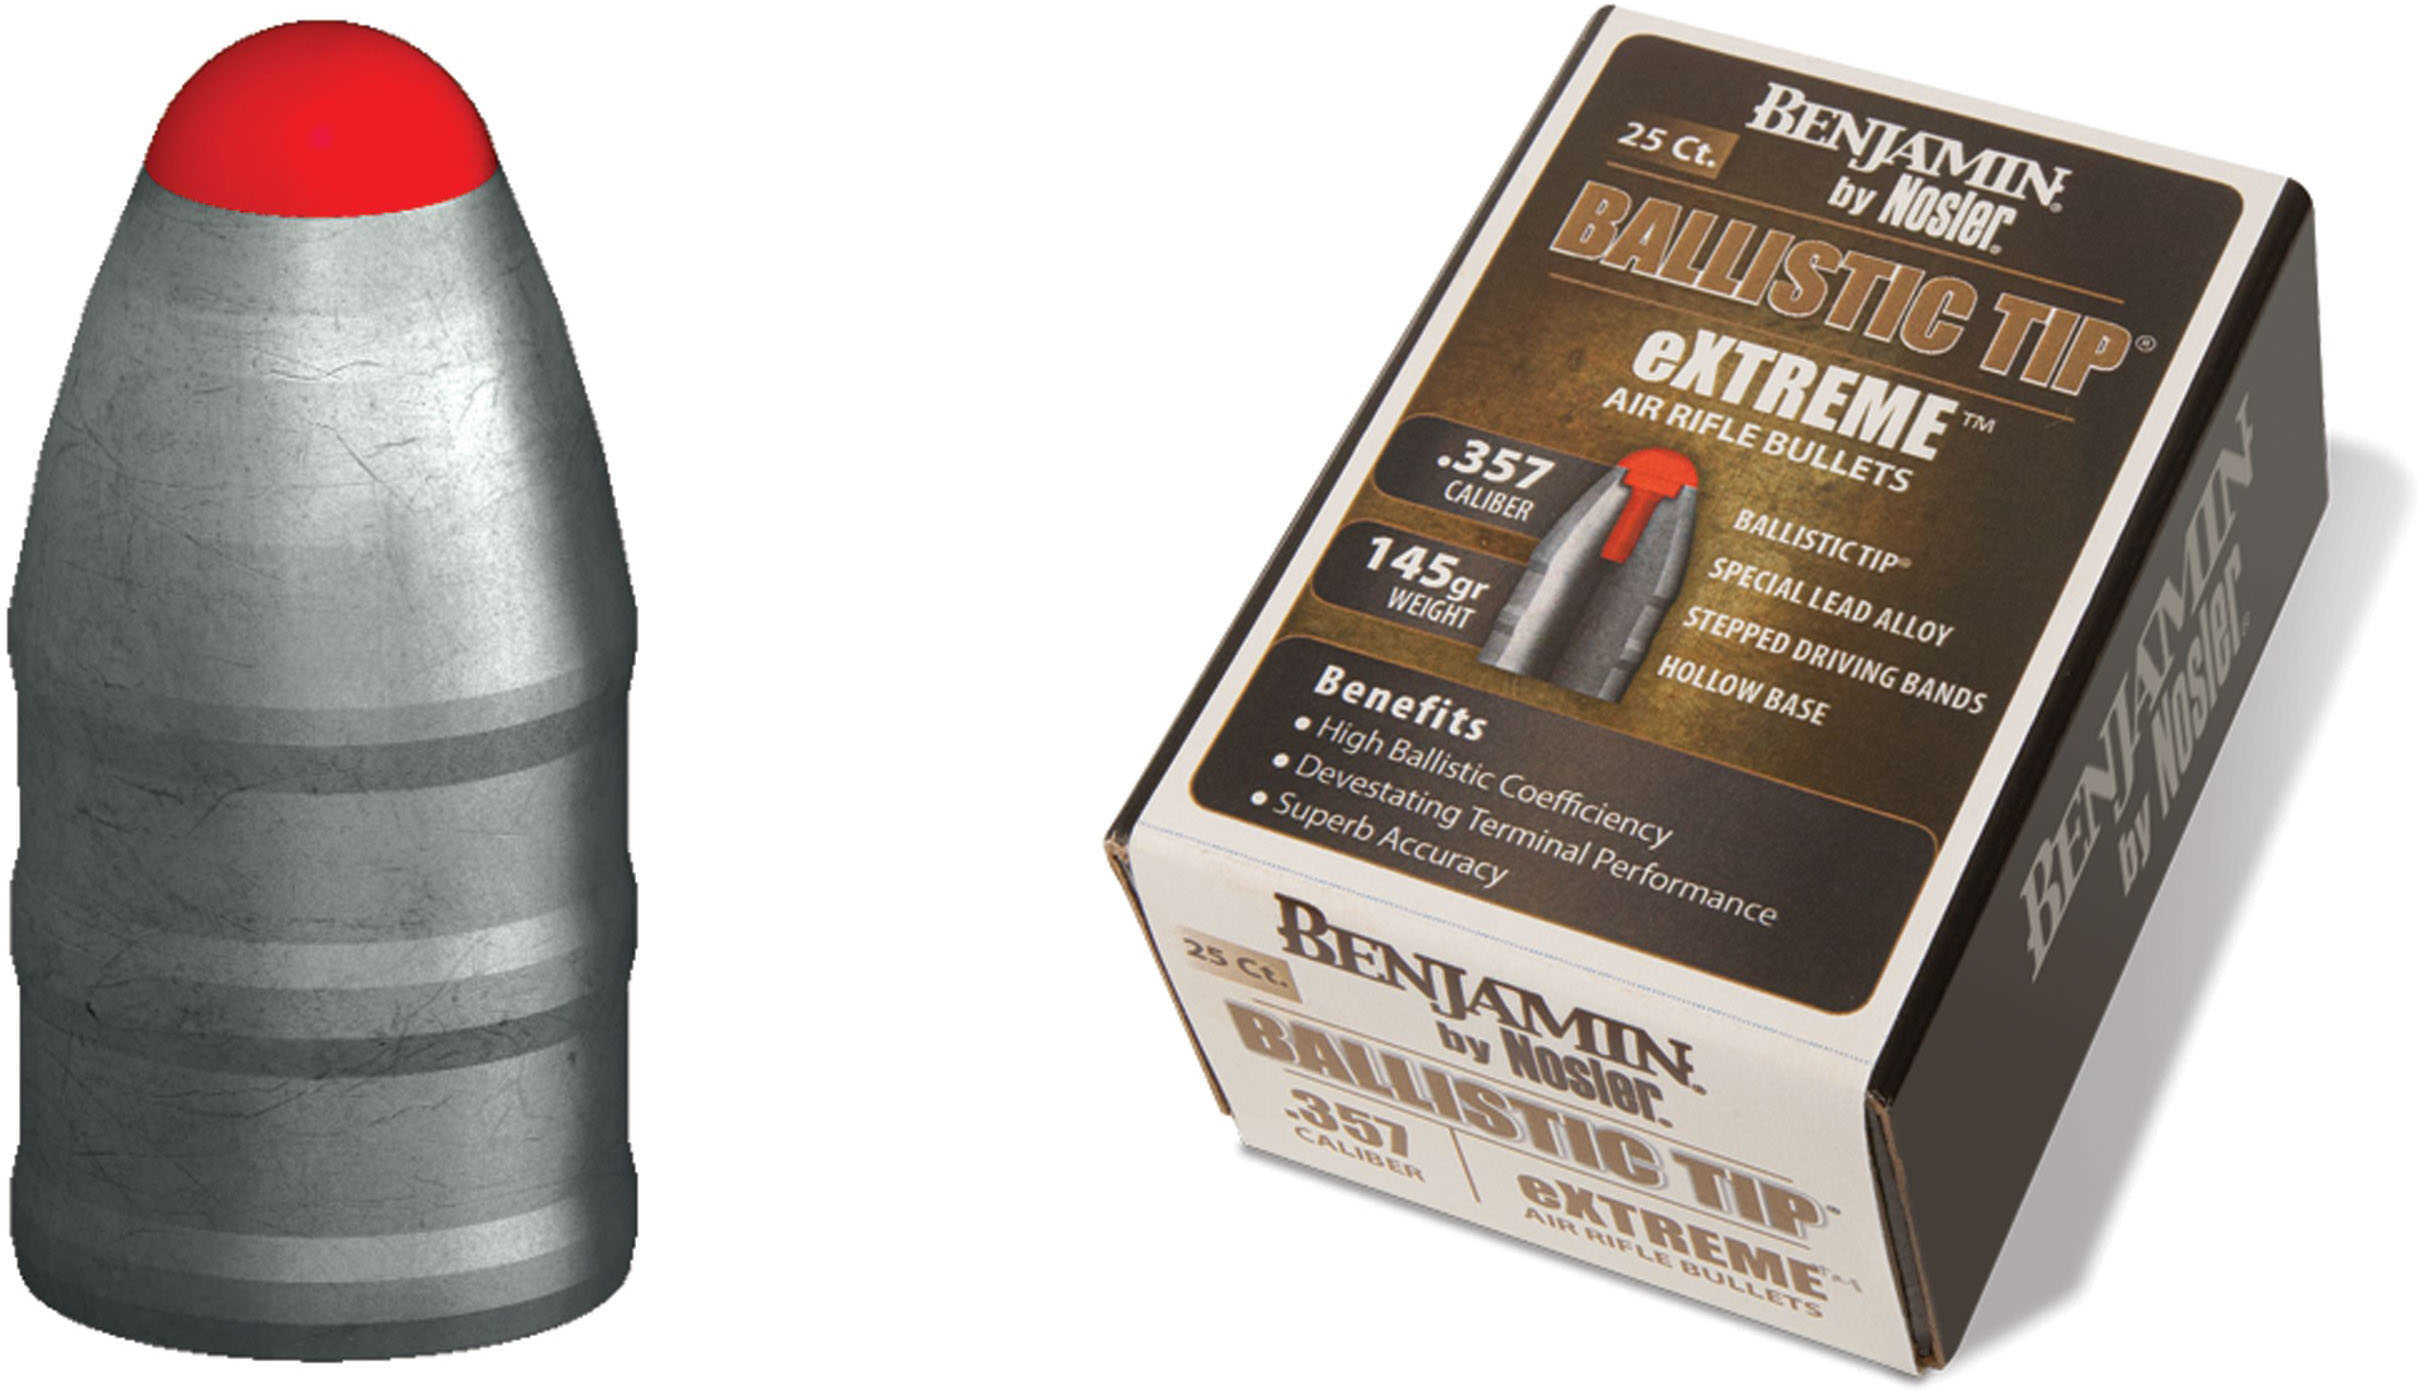 Benjamin Extreme Airgun Pellets 357 Caliber 145 Grain Nosler Ballistic Tip, 25 Rounds Per Box